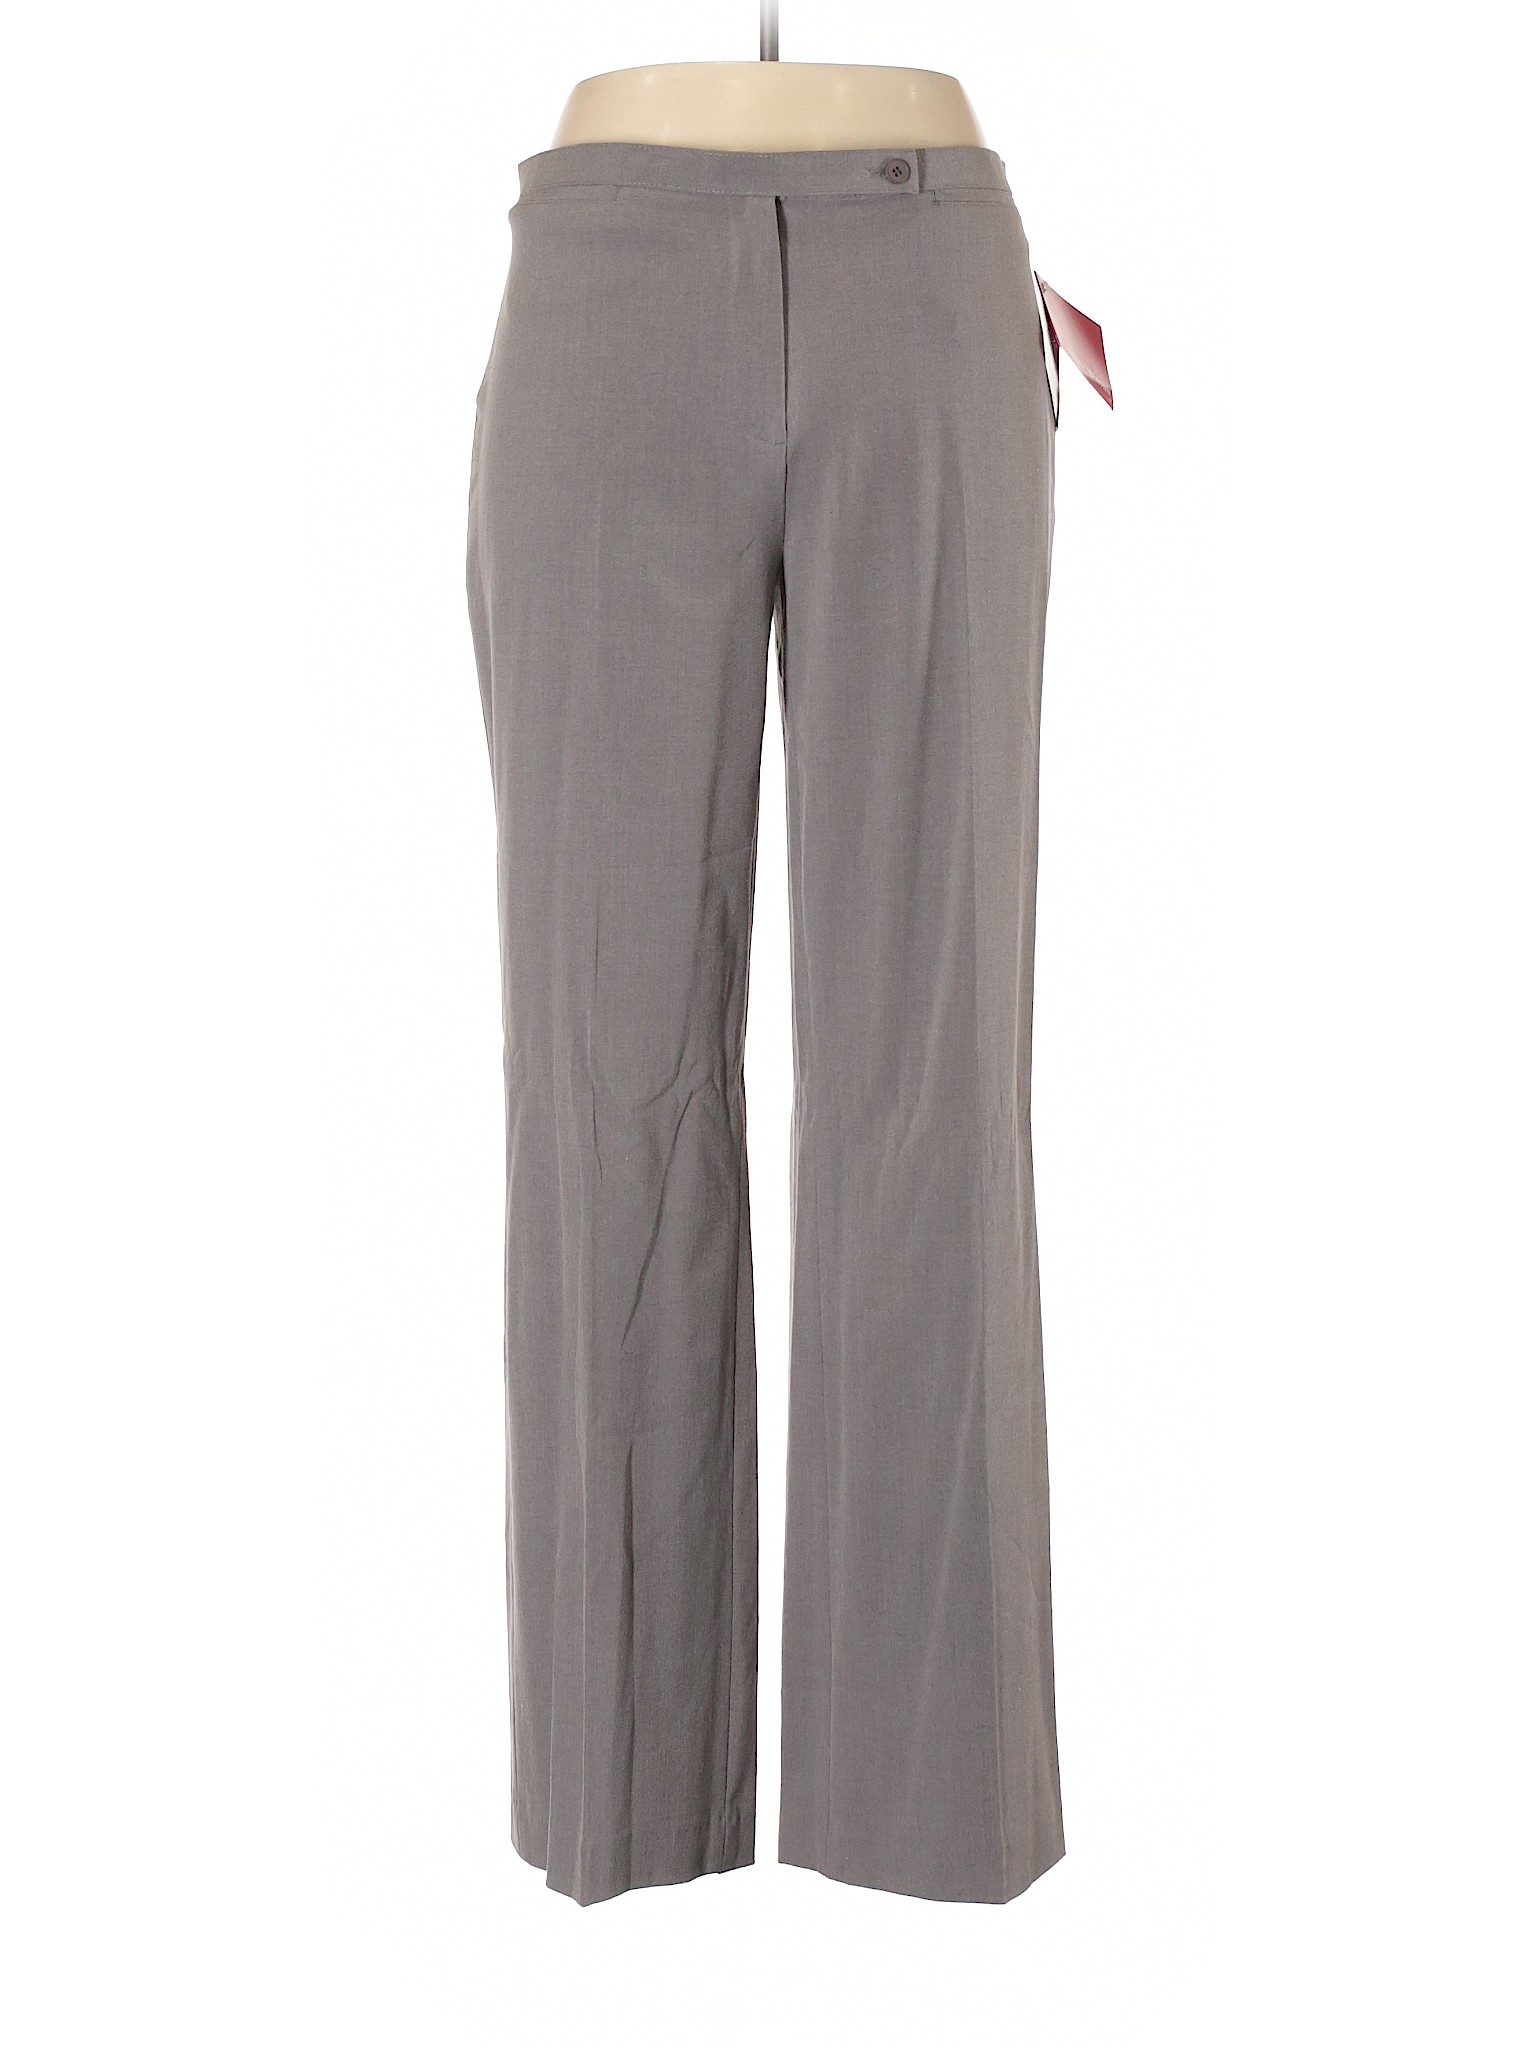 NWT Focus 2000 Women Gray Dress Pants 12 | eBay